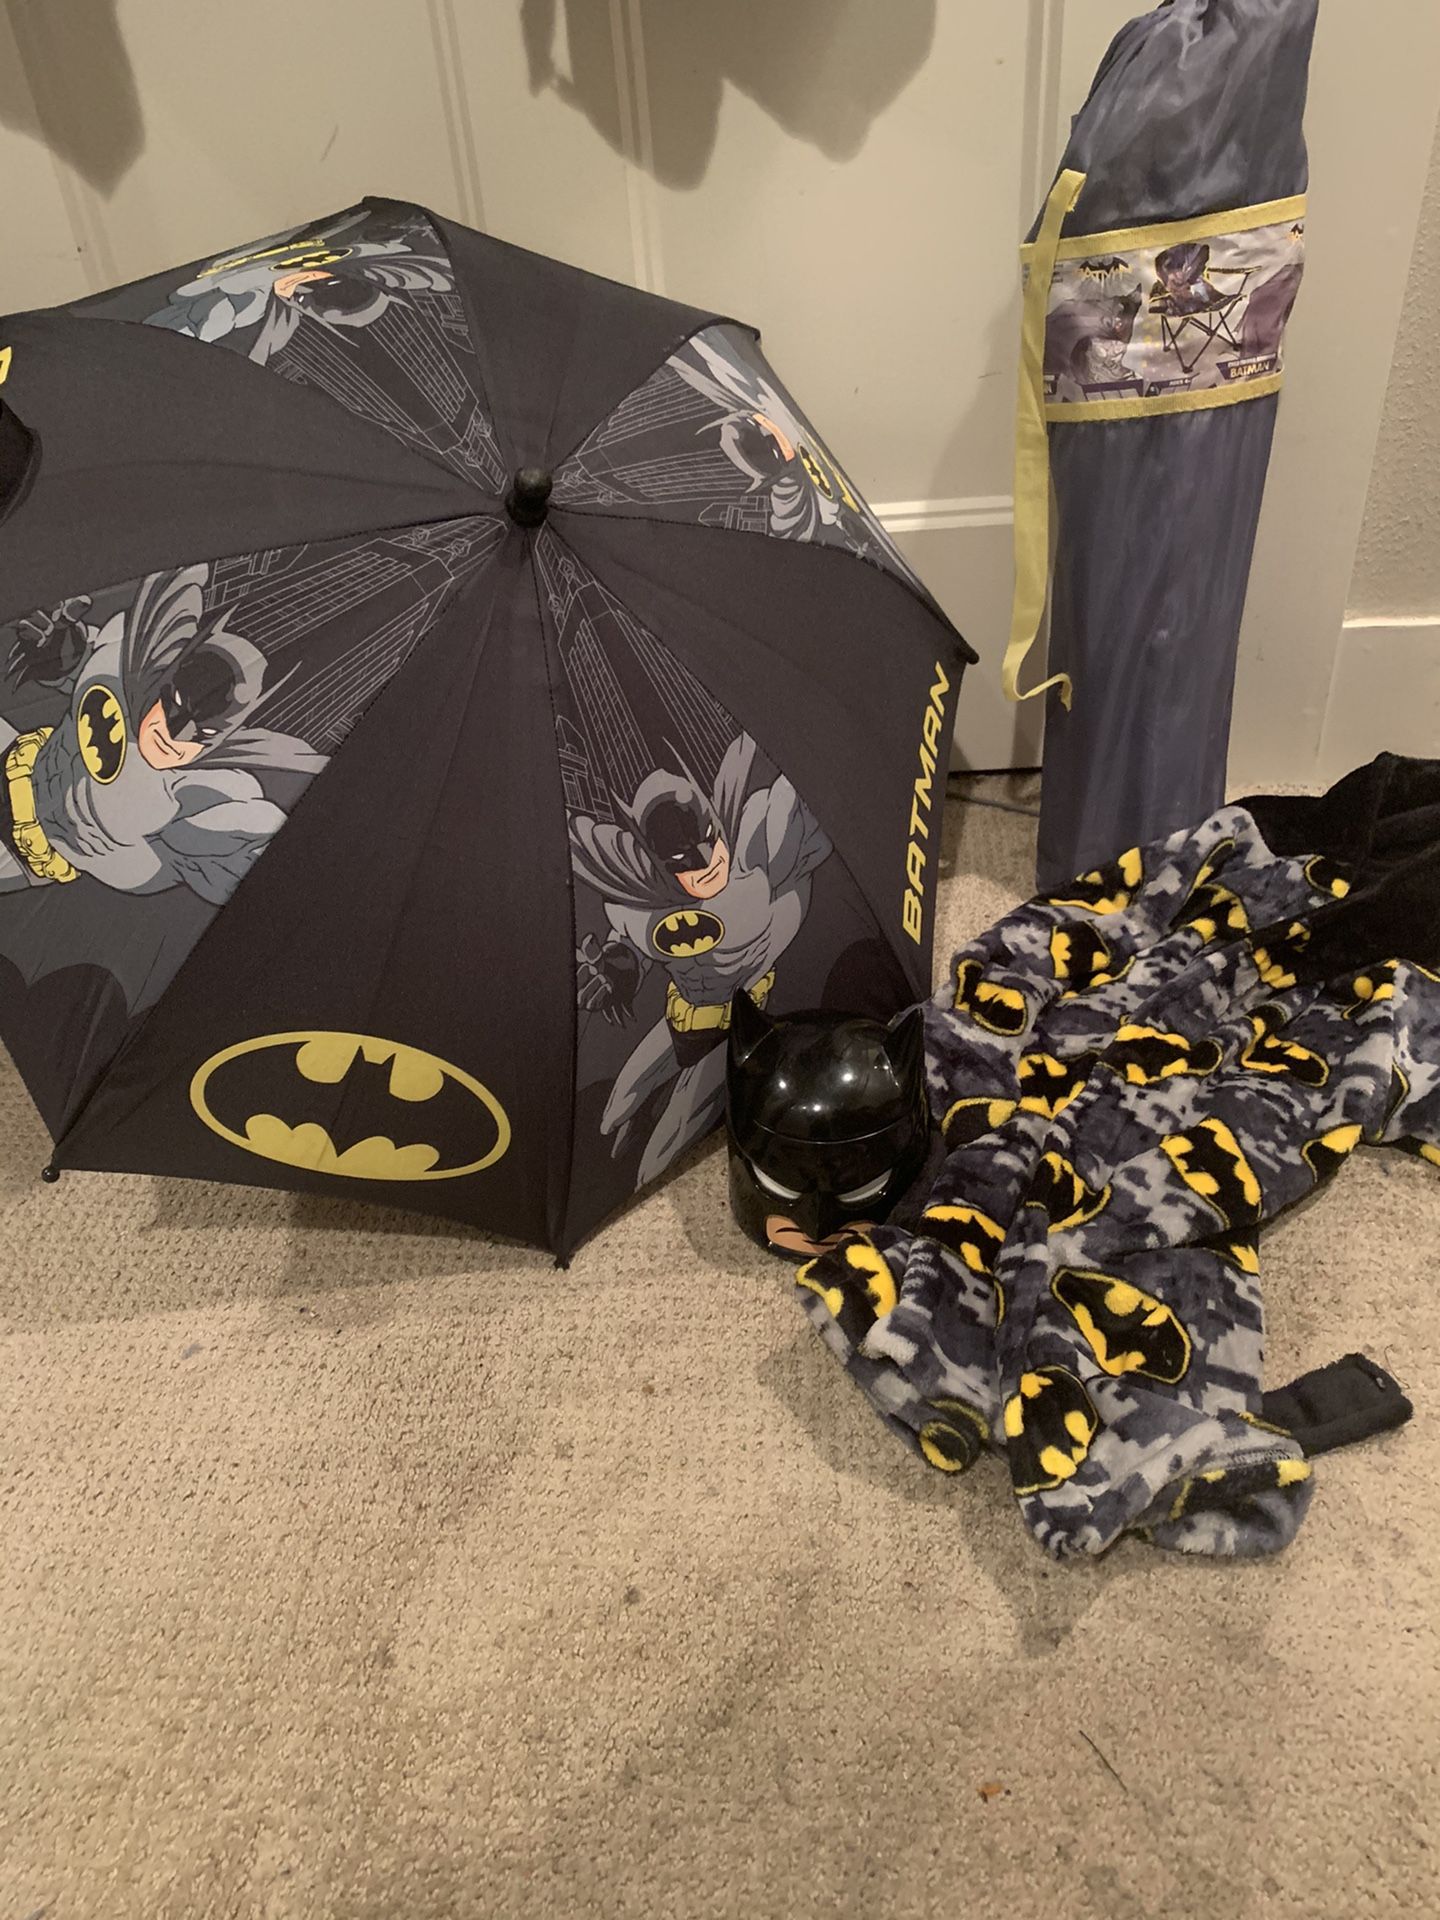 Selling Batman stuff-umbrella, Batman head container-foldable kids chair & bathrobe / $30